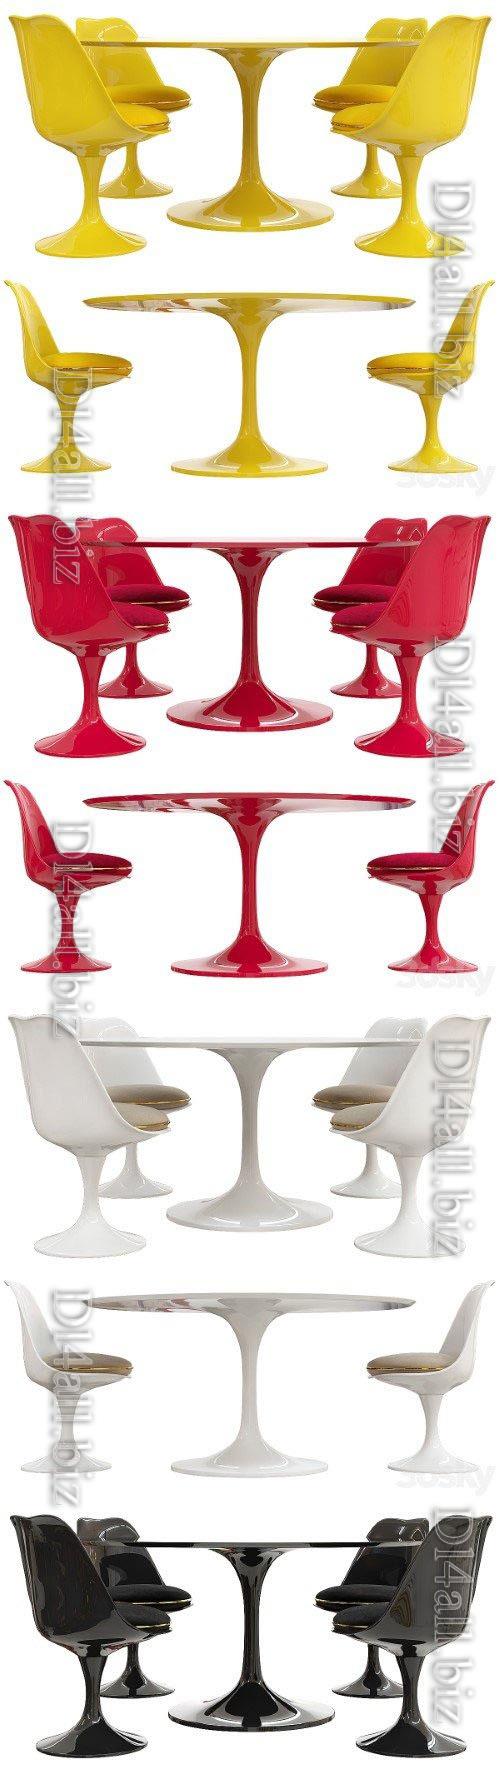 Saarinen tulip table chairs - 3d model